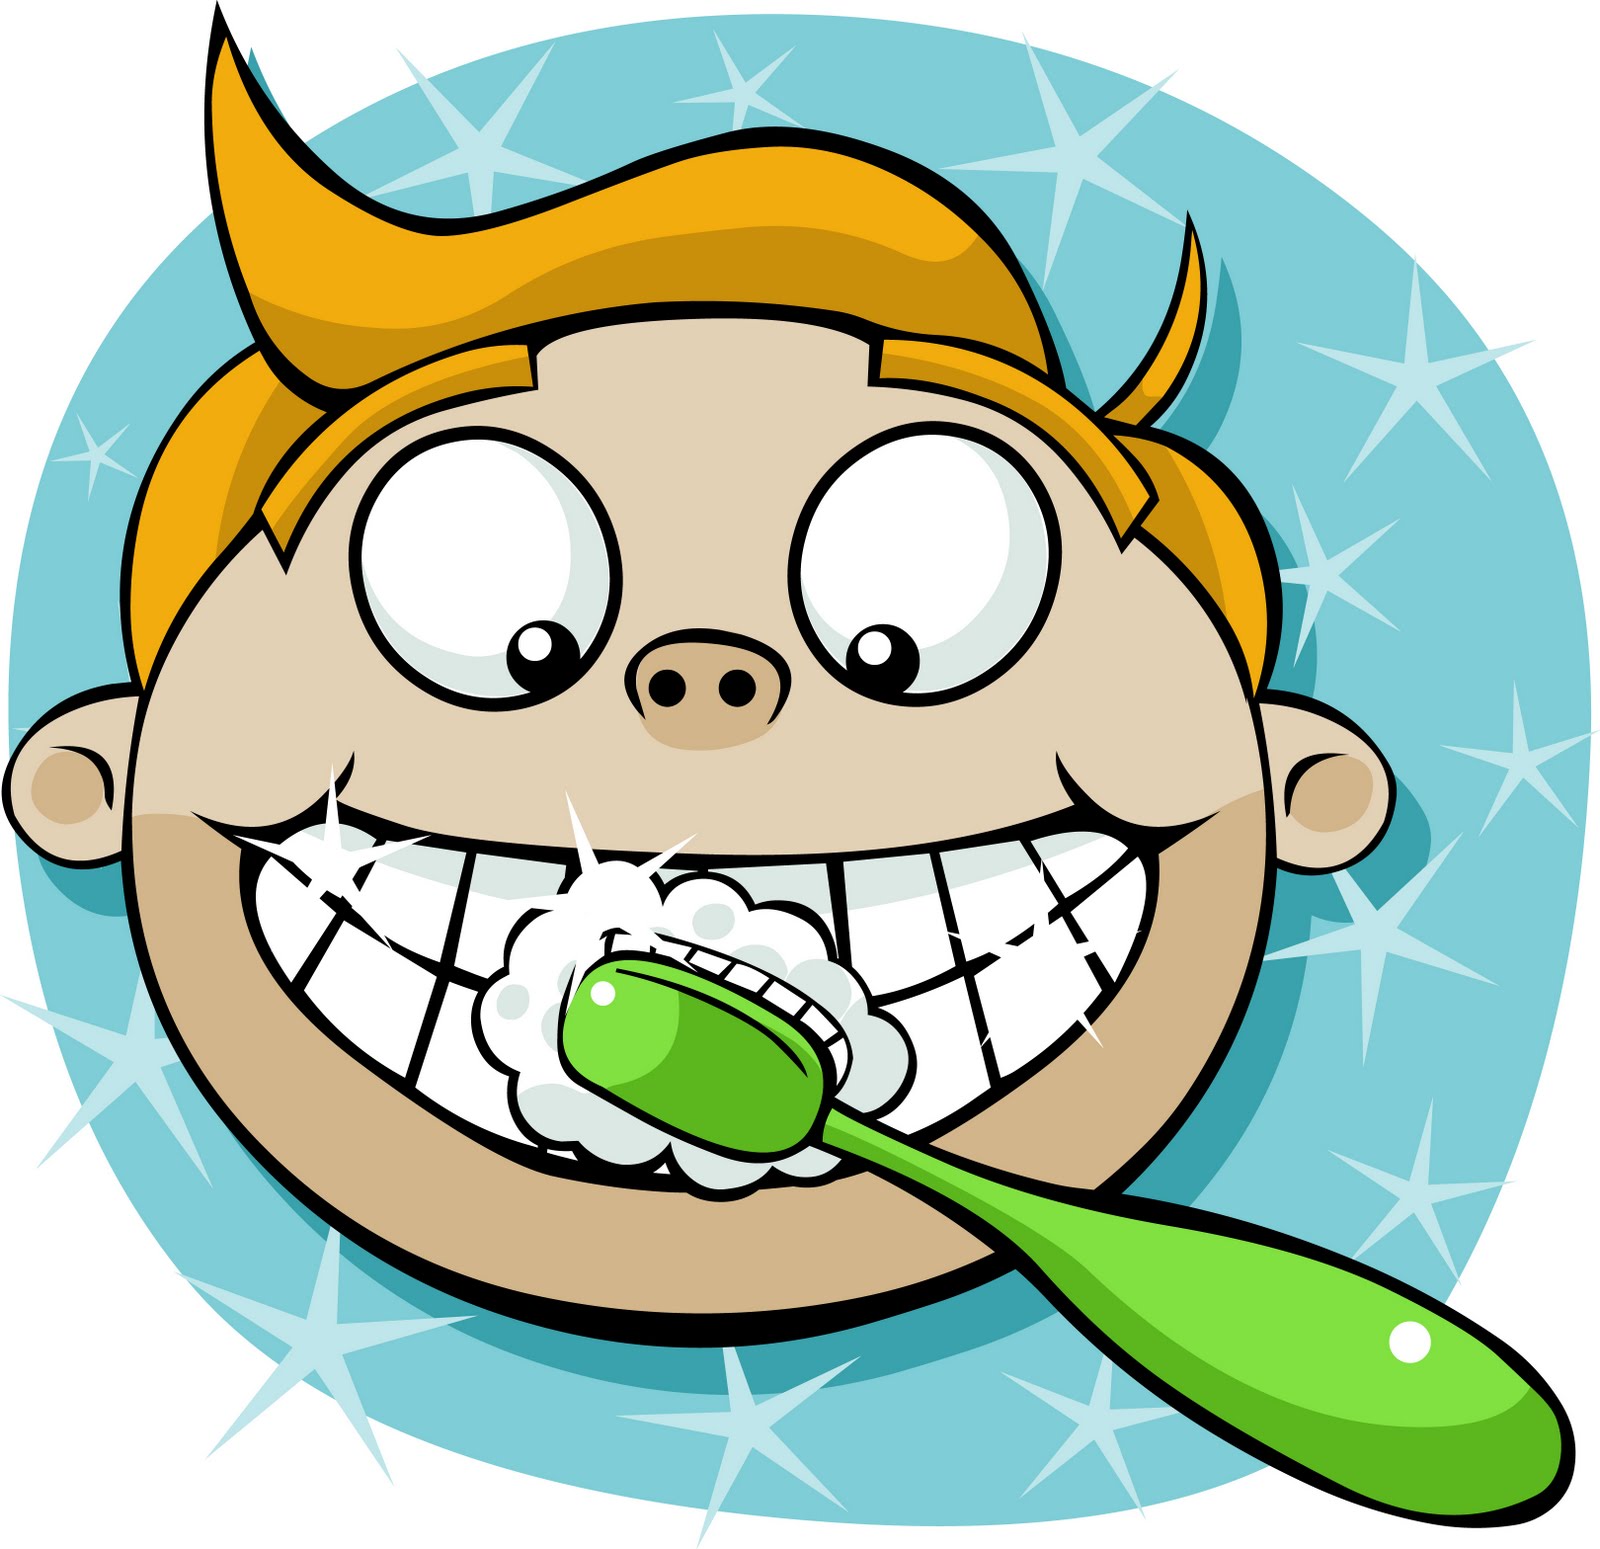 Animated brushing teeth clipart - ClipartFox